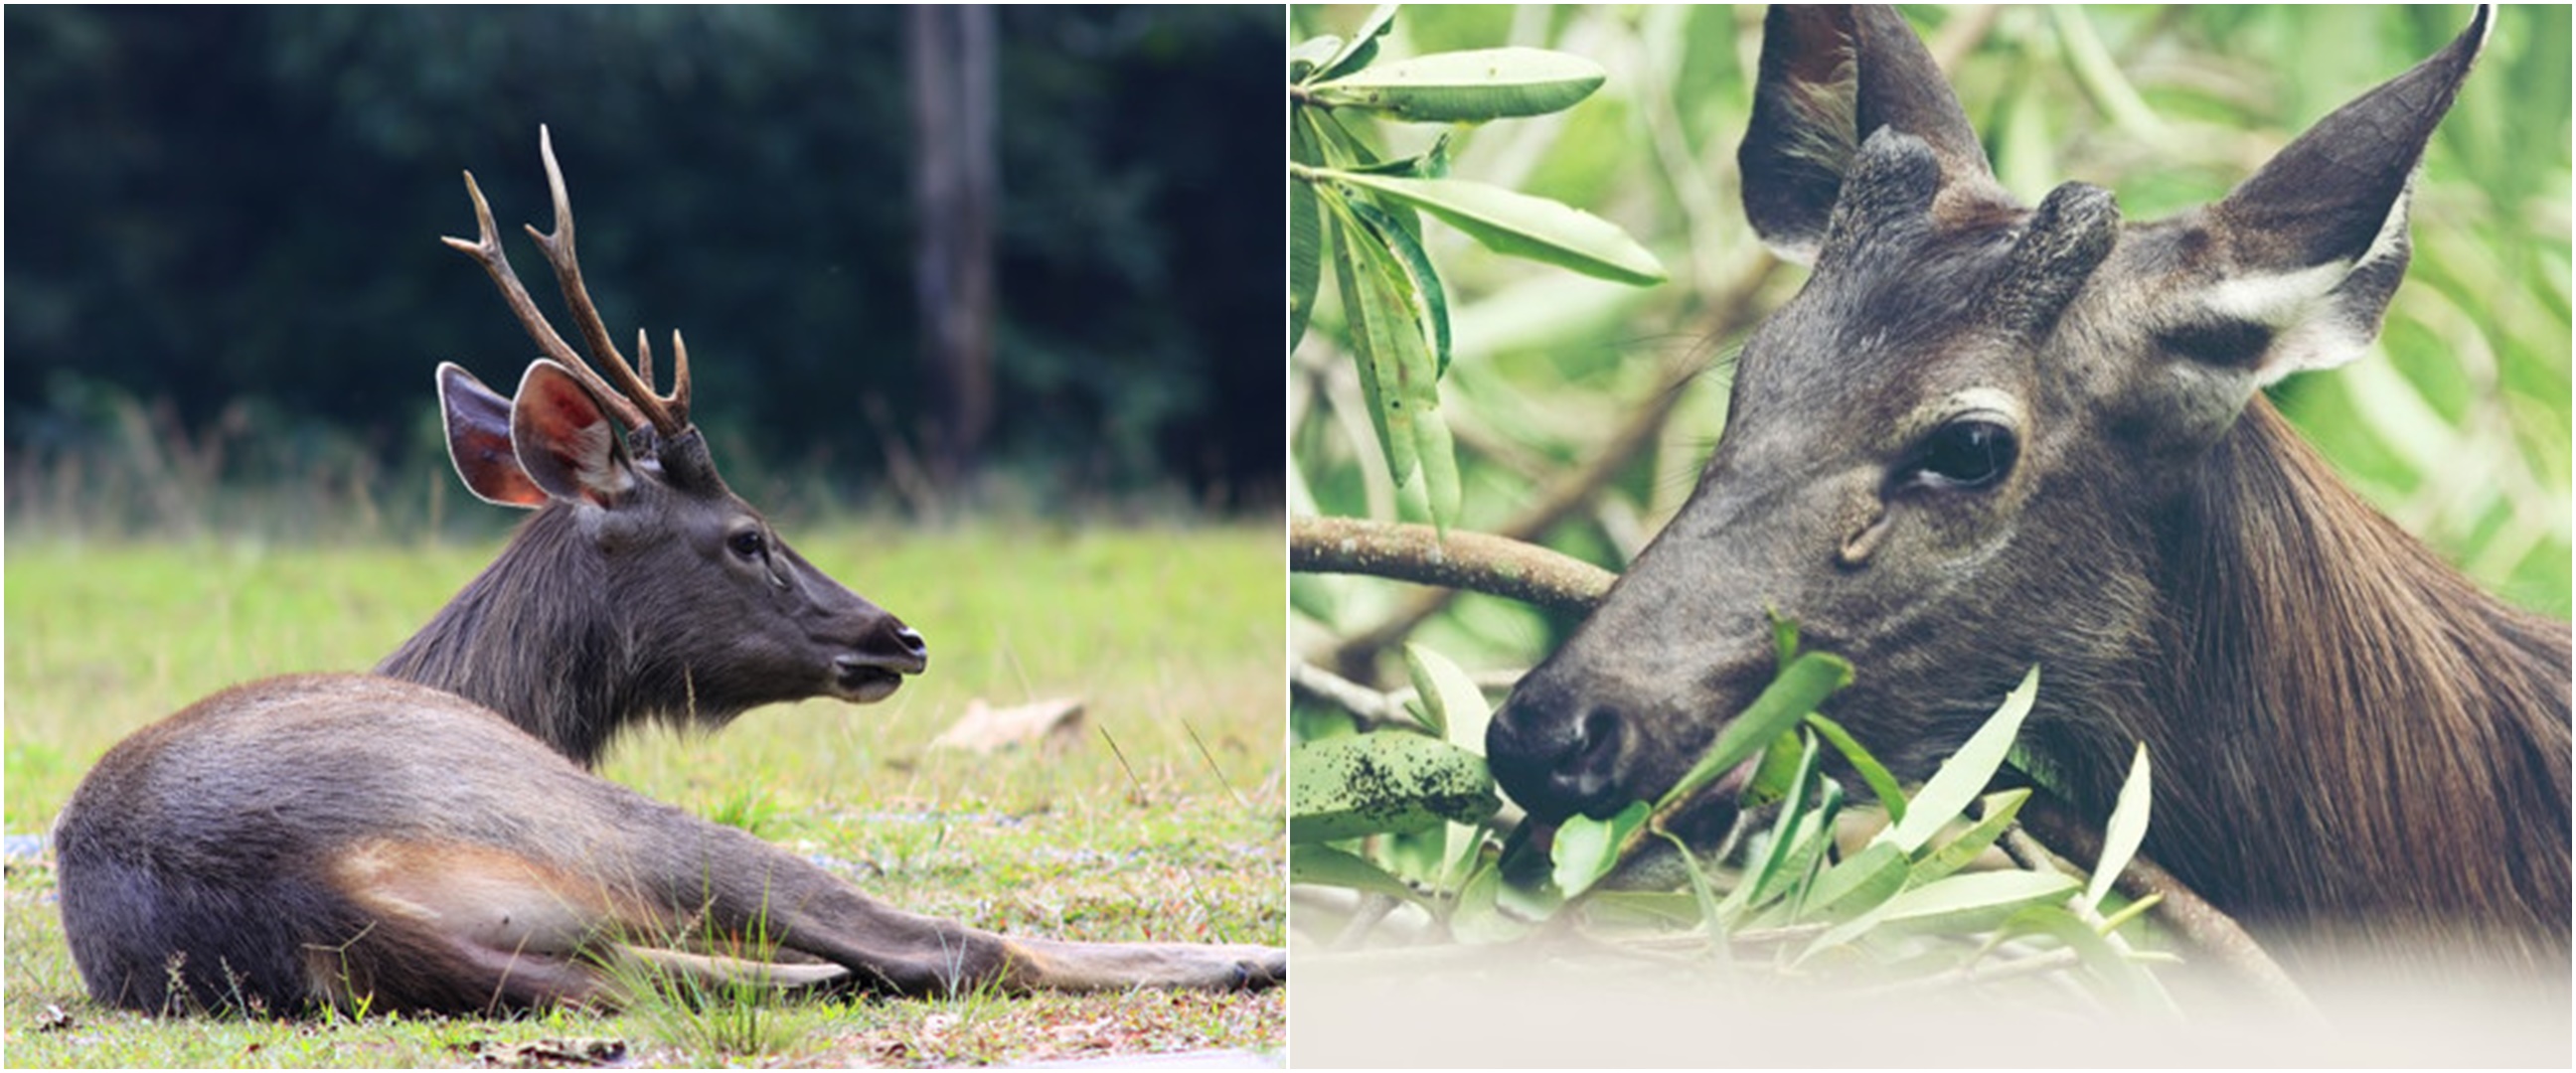 Kebun binatang di Bandung bakal potong rusa untuk makanan macan